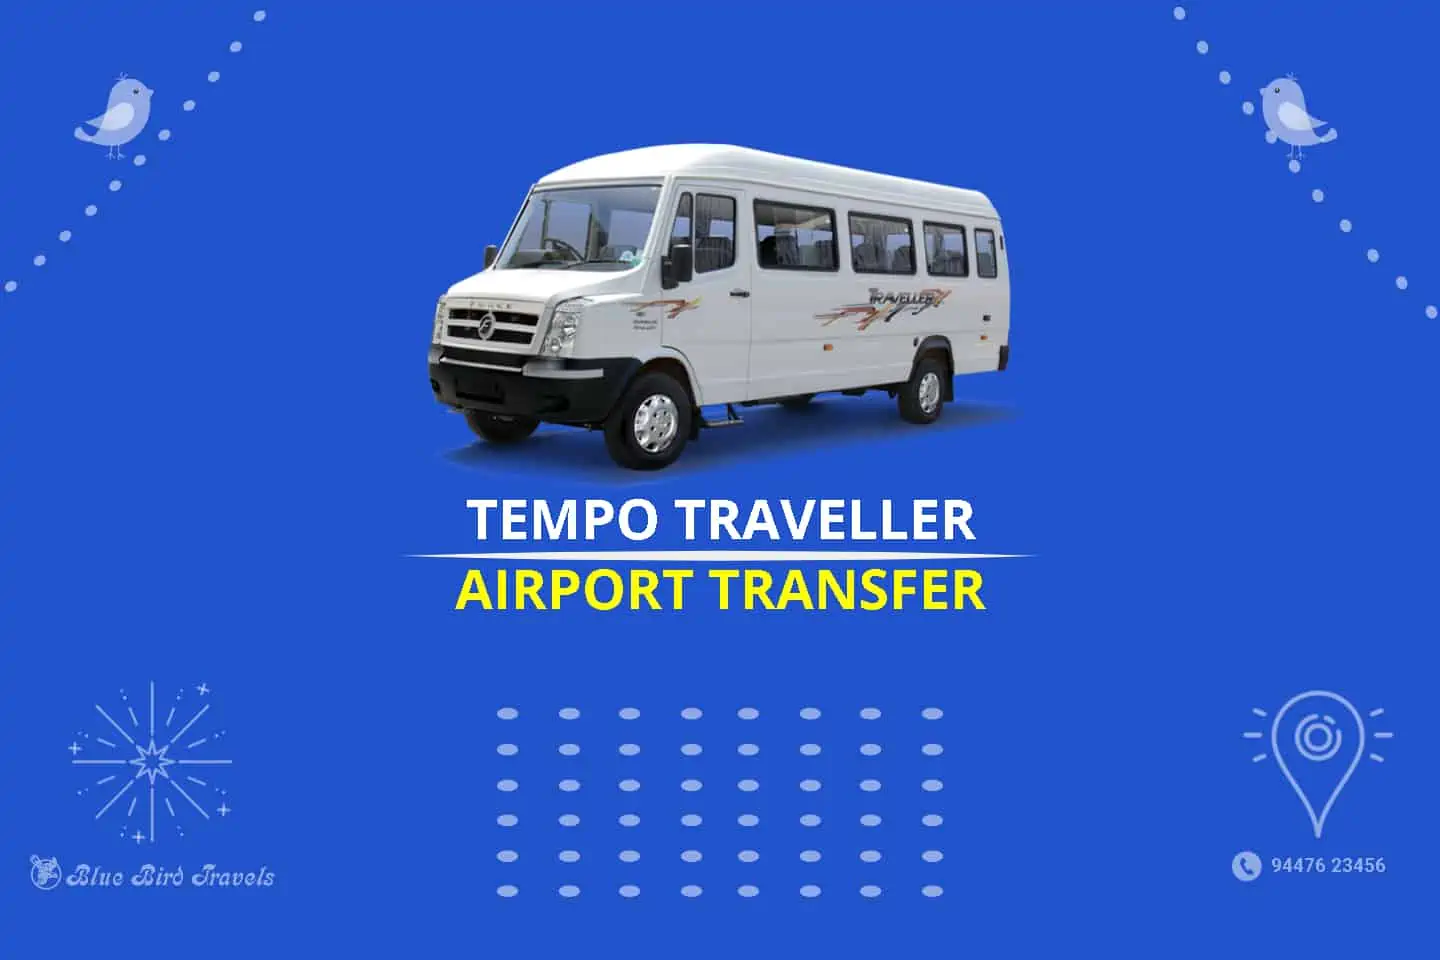 Tempo Traveller - Airport Transfer